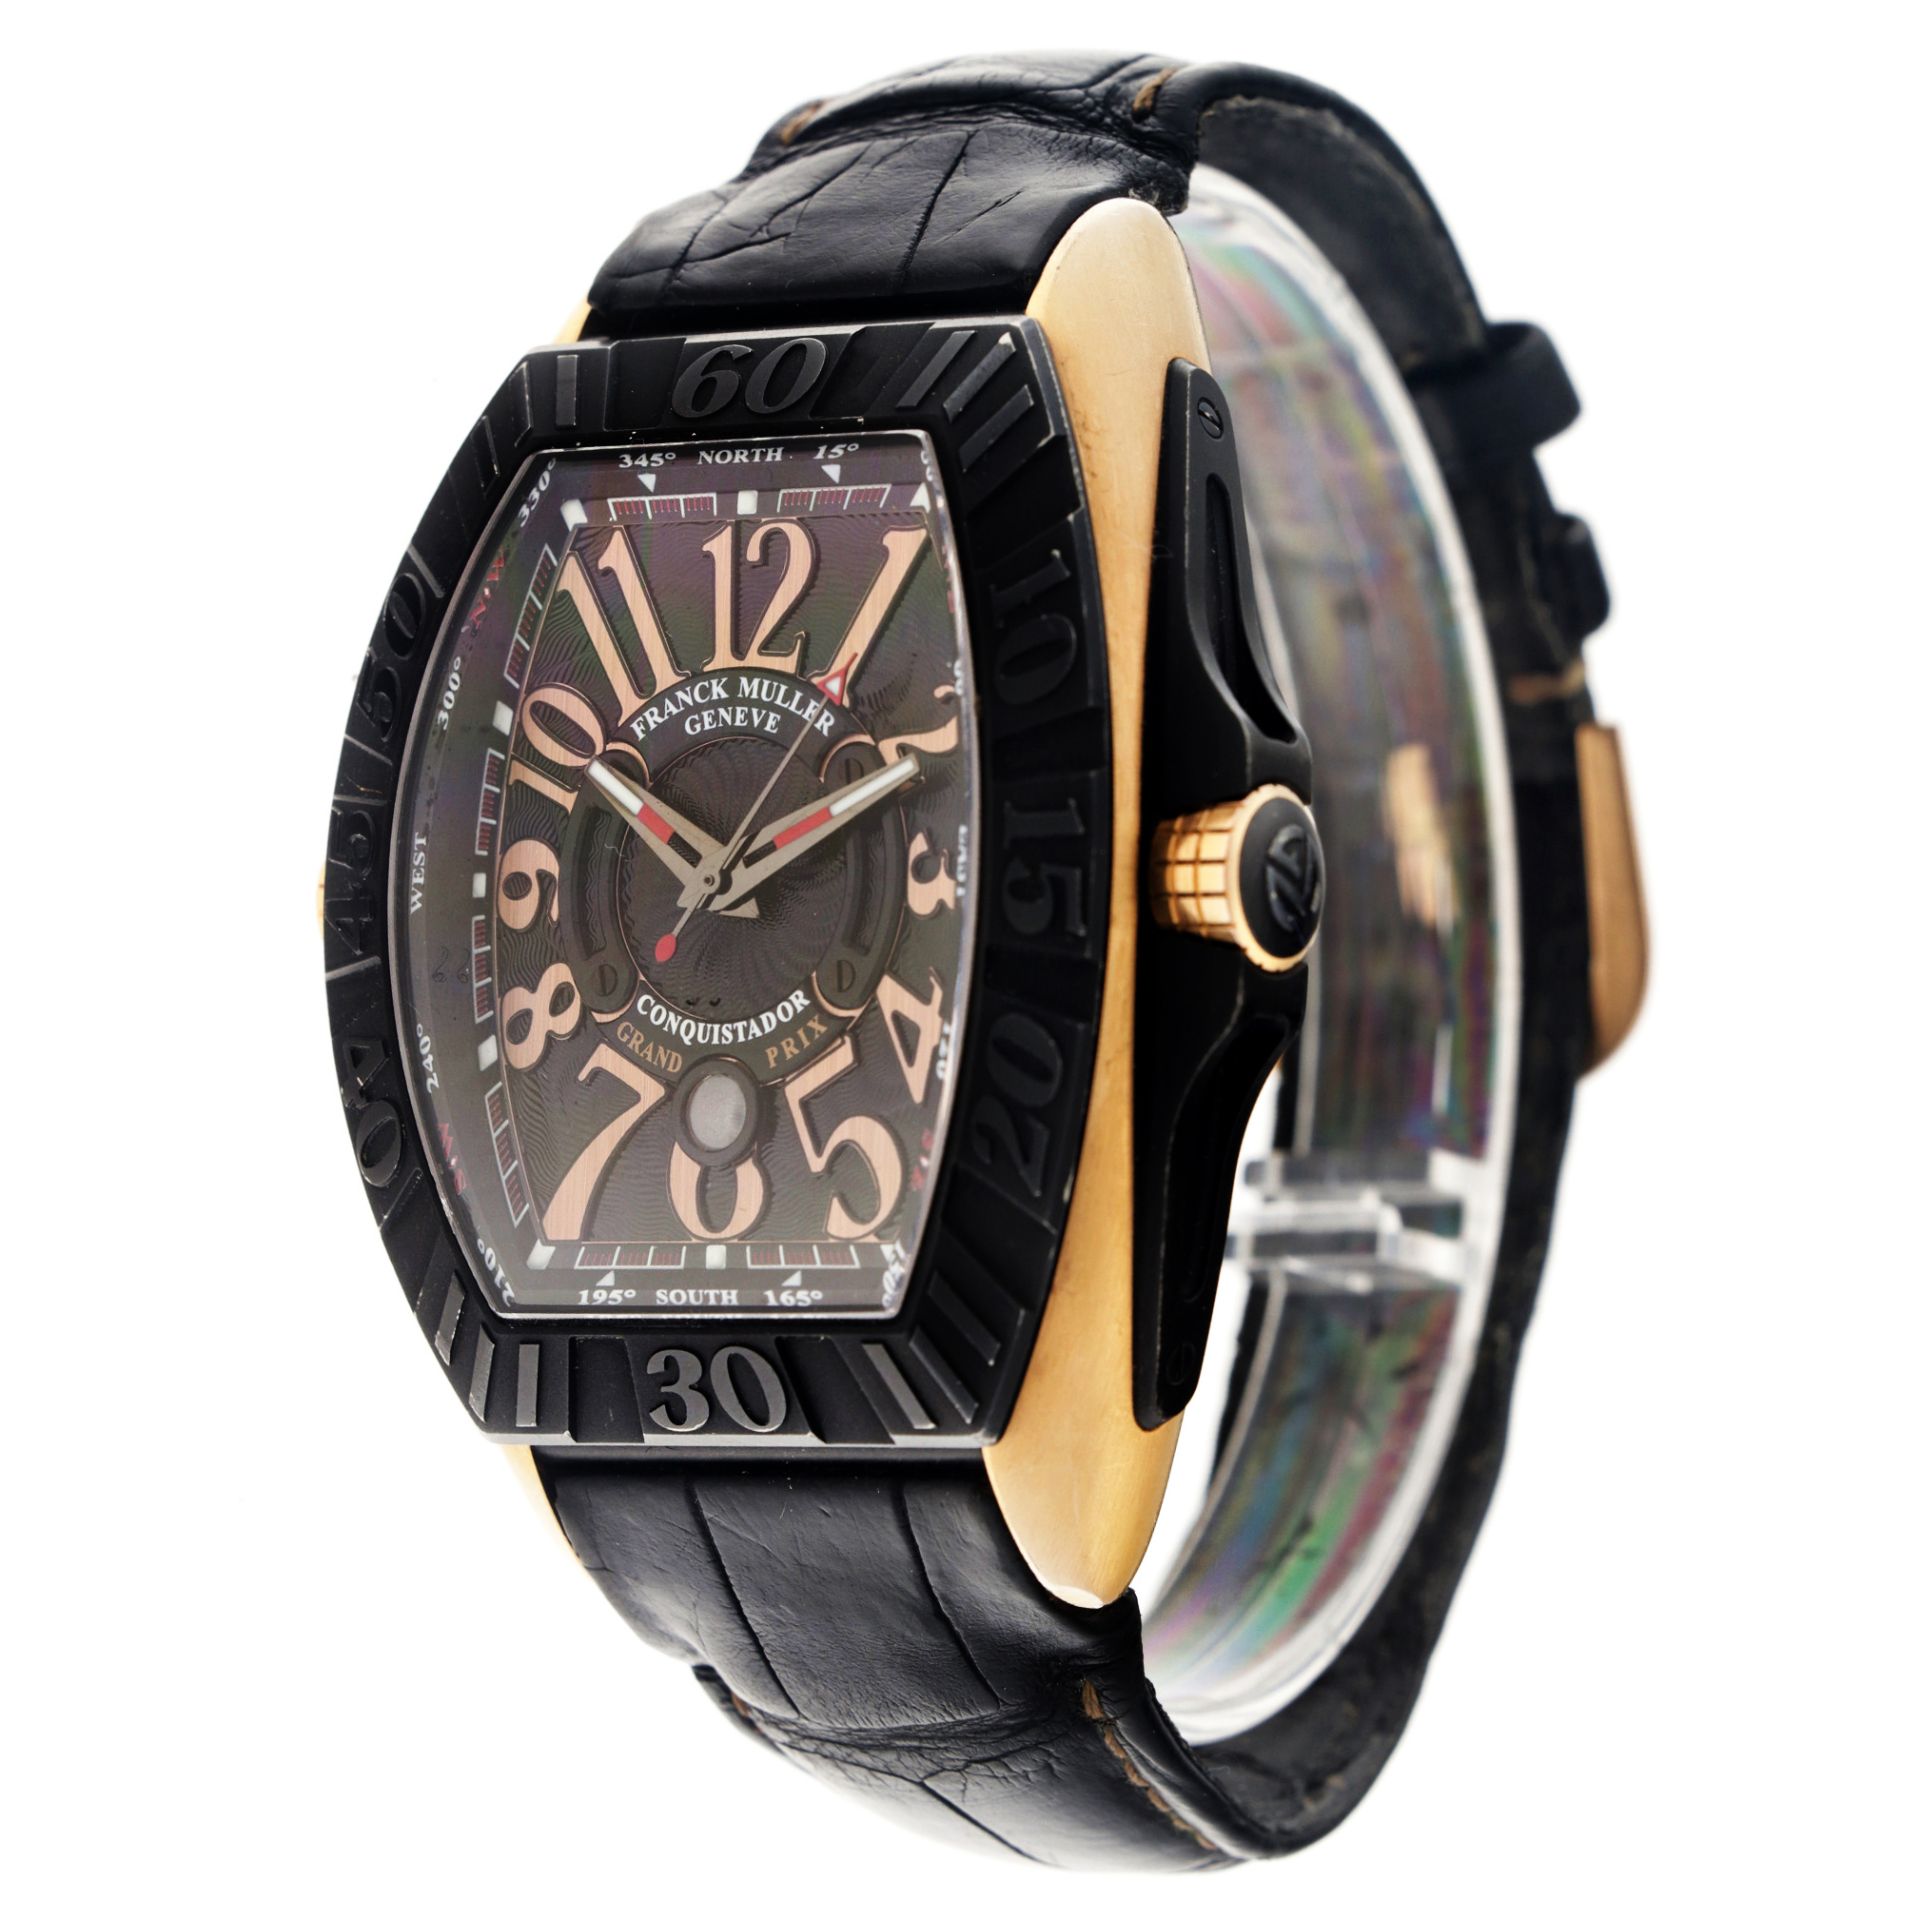 Frank Muller Conquistador GPG 9900 SC GP - Men's watch. - Image 2 of 7